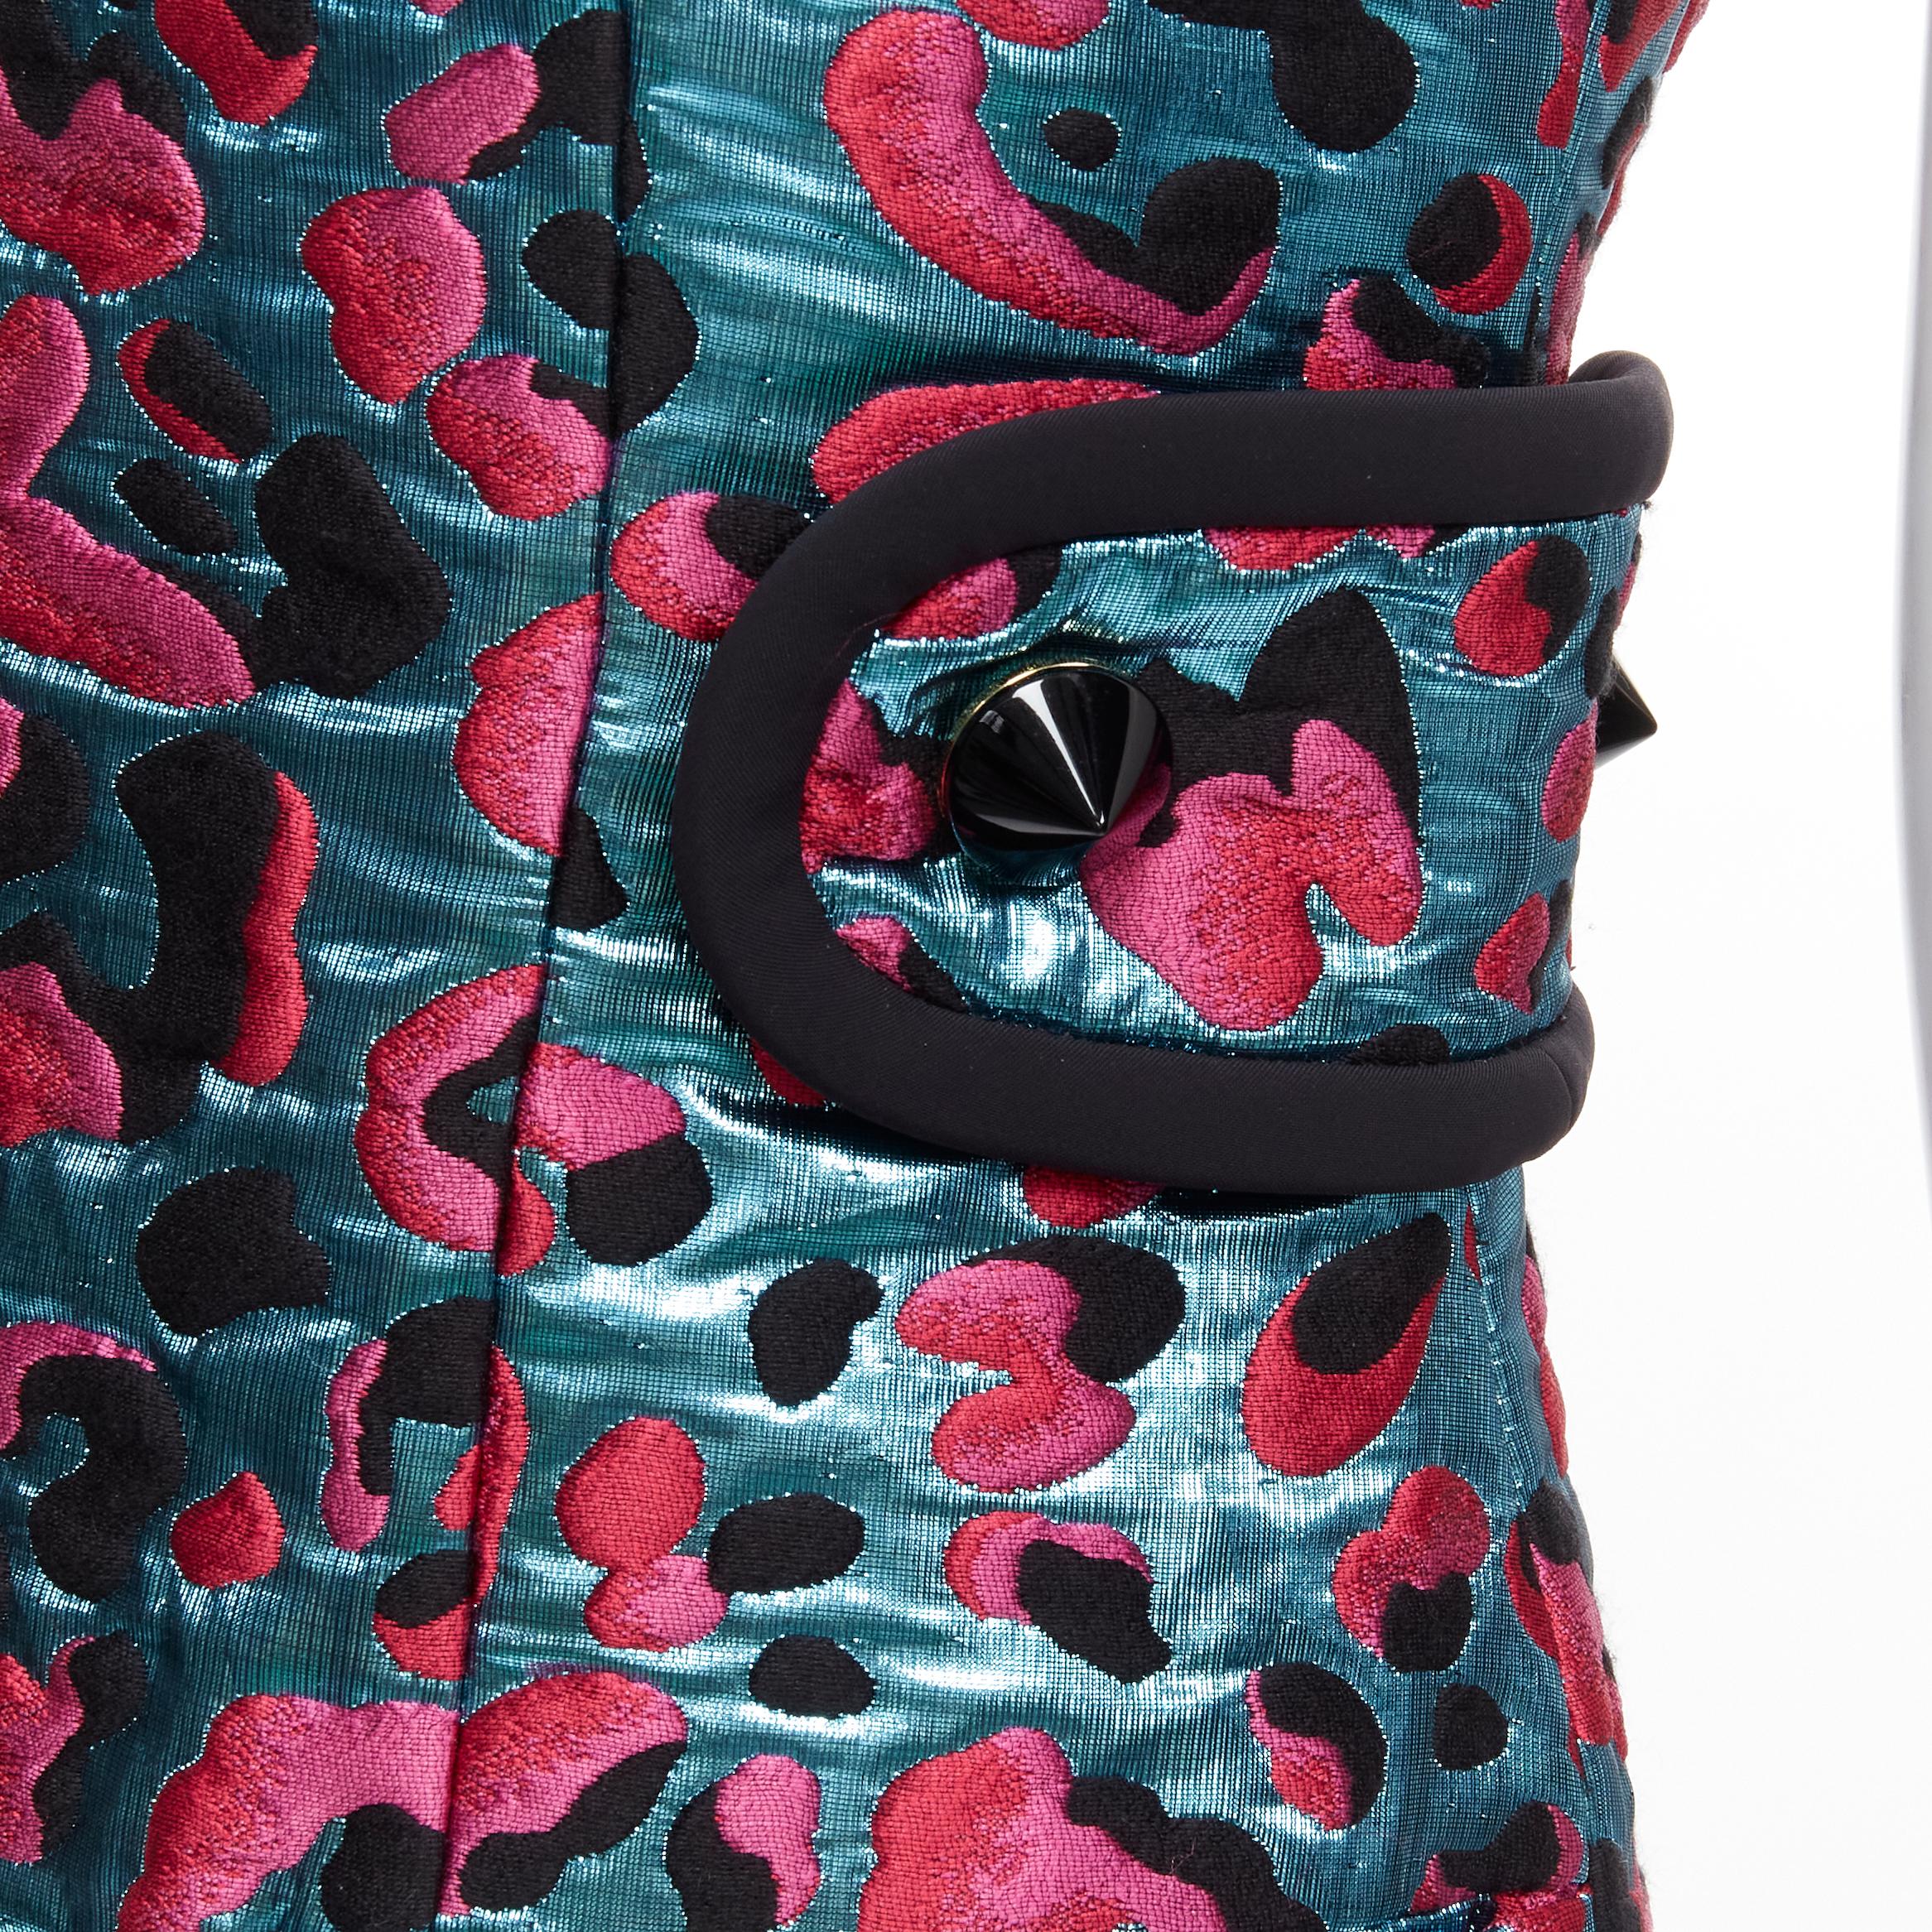 LOUIS VUITTON 2022 metallic blue pink leopard jacquard strap belt dress FR34 XS
Brand: Louis Vuitton
Designer: Nicolas Ghesquiere
Material: Polyester
Color: Blue
Pattern: Leopard
Closure: Zip
Extra Detail: Metallic blue and pink jacquard. Belt with